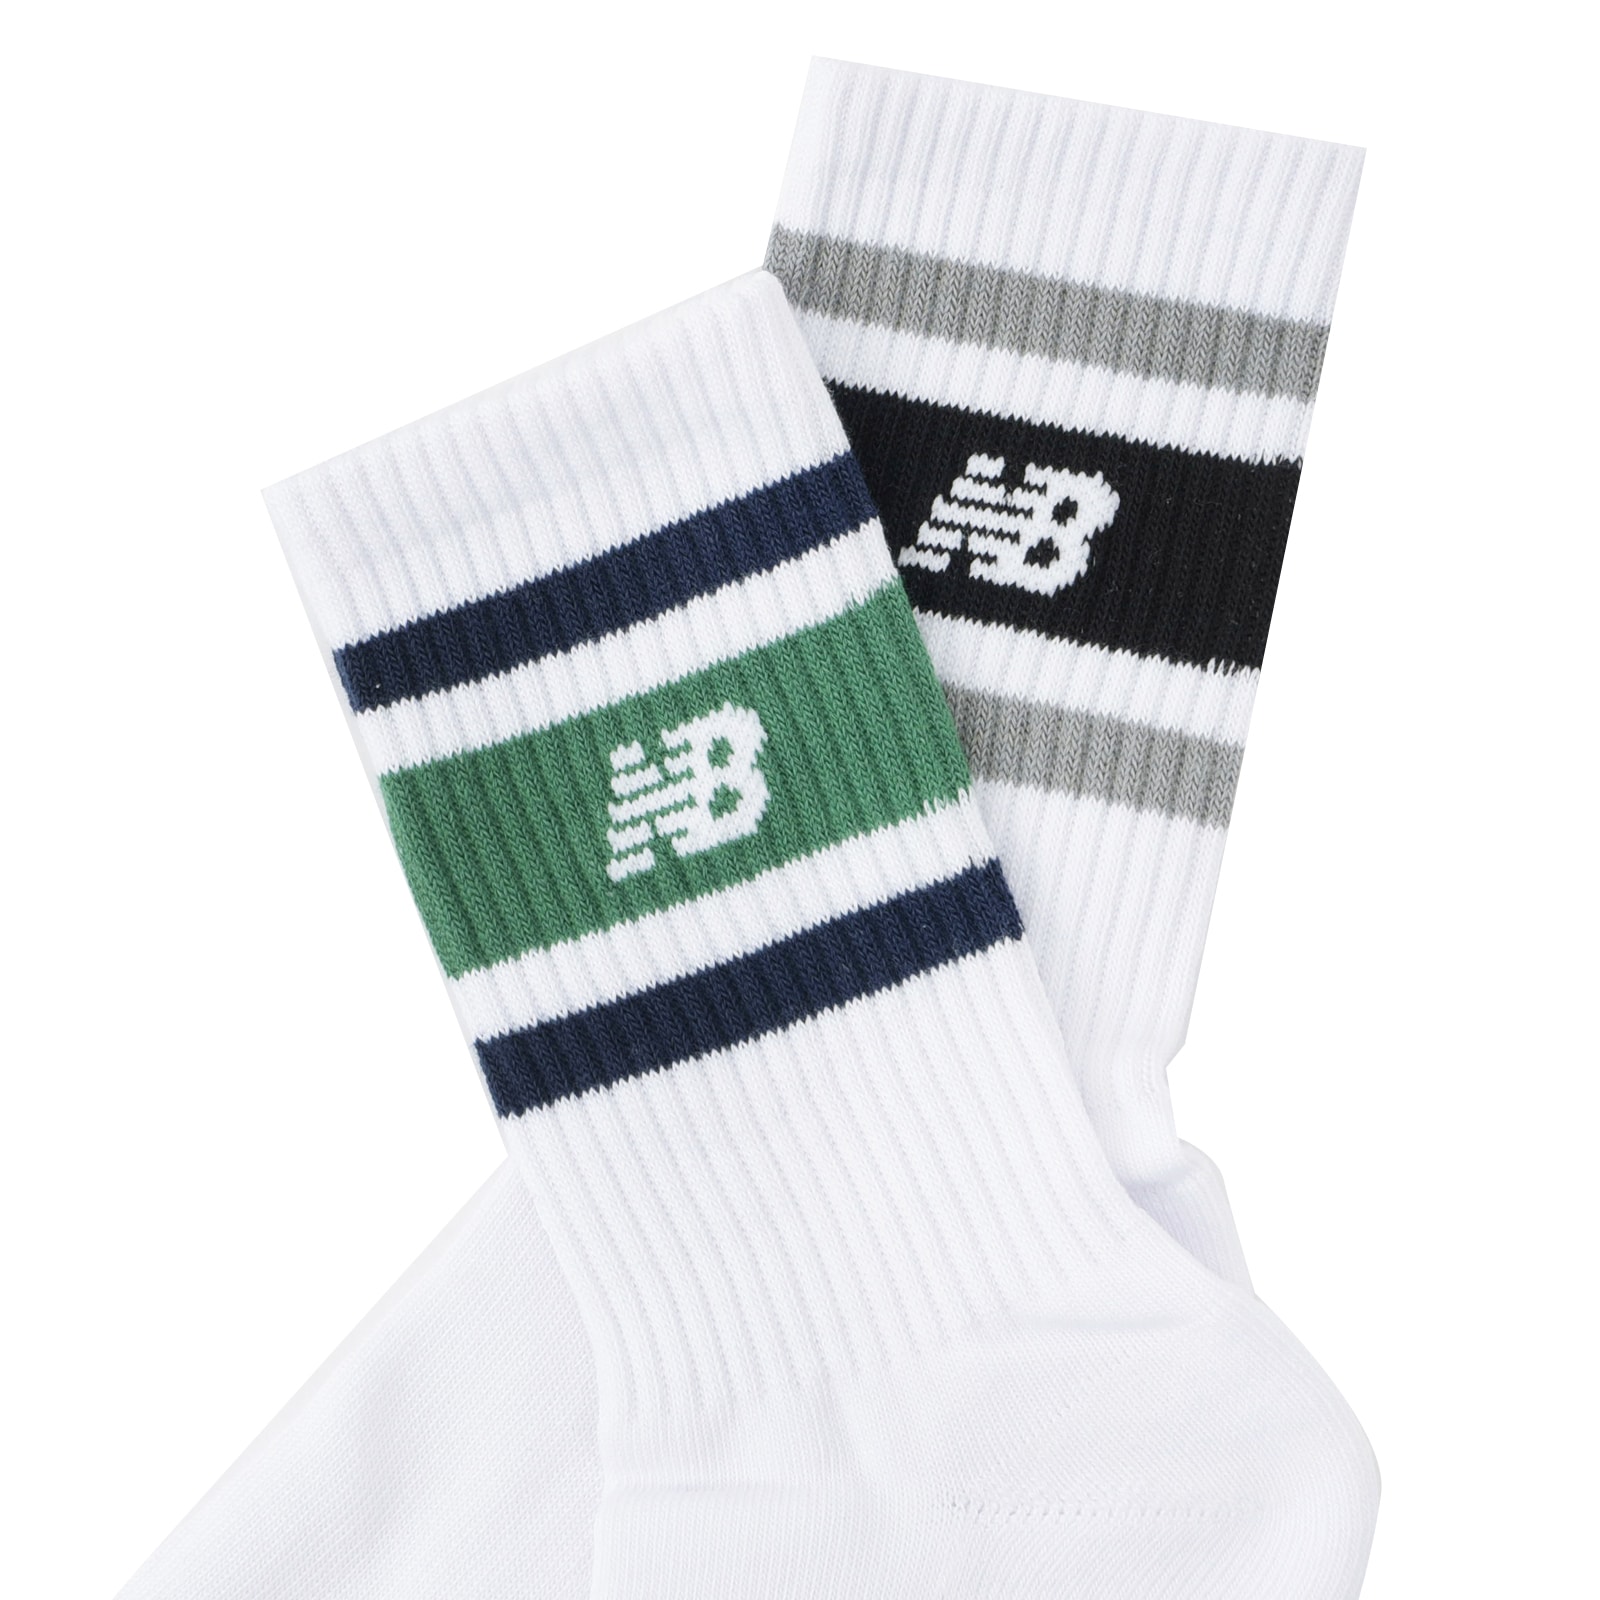 2P Line Socks